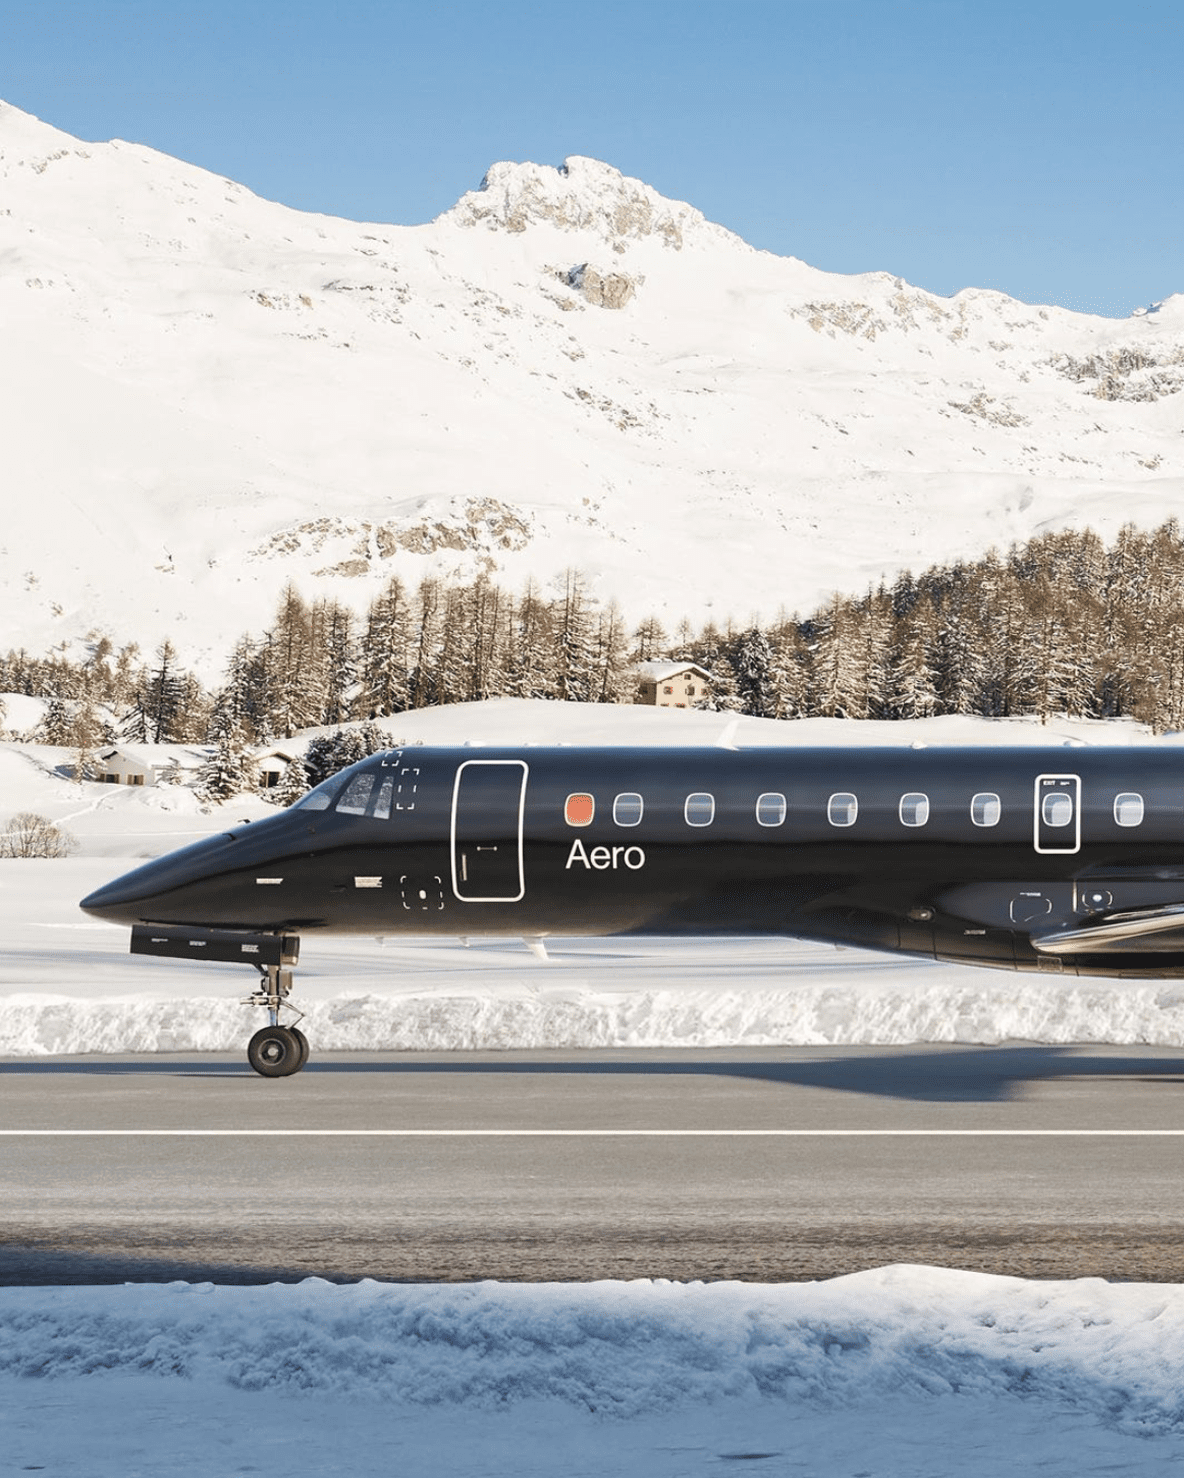 Aero semi-private jet service | a plane against a snowy mountain backdrop